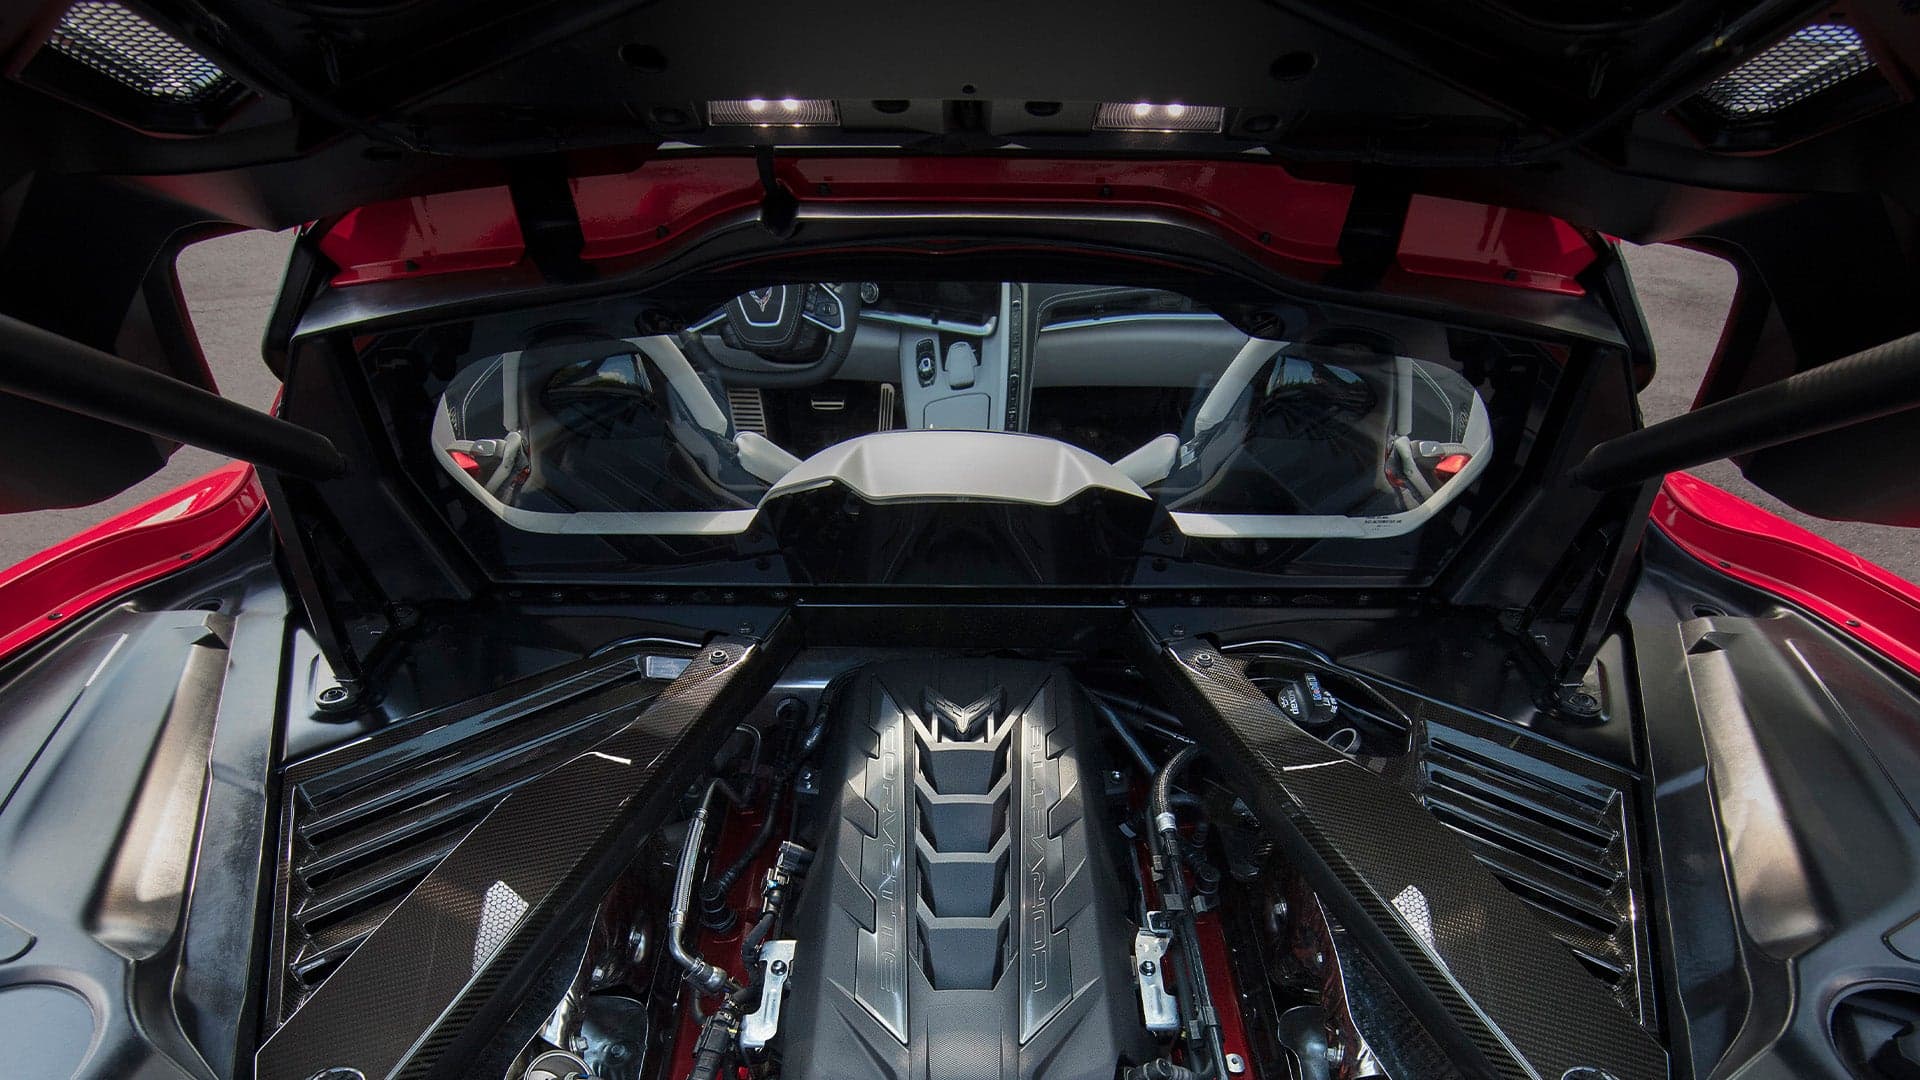 2020 Chevrolet Corvette C8 Engine Lineup Leak Reveals Twin-Turbo V8 With 850 HP